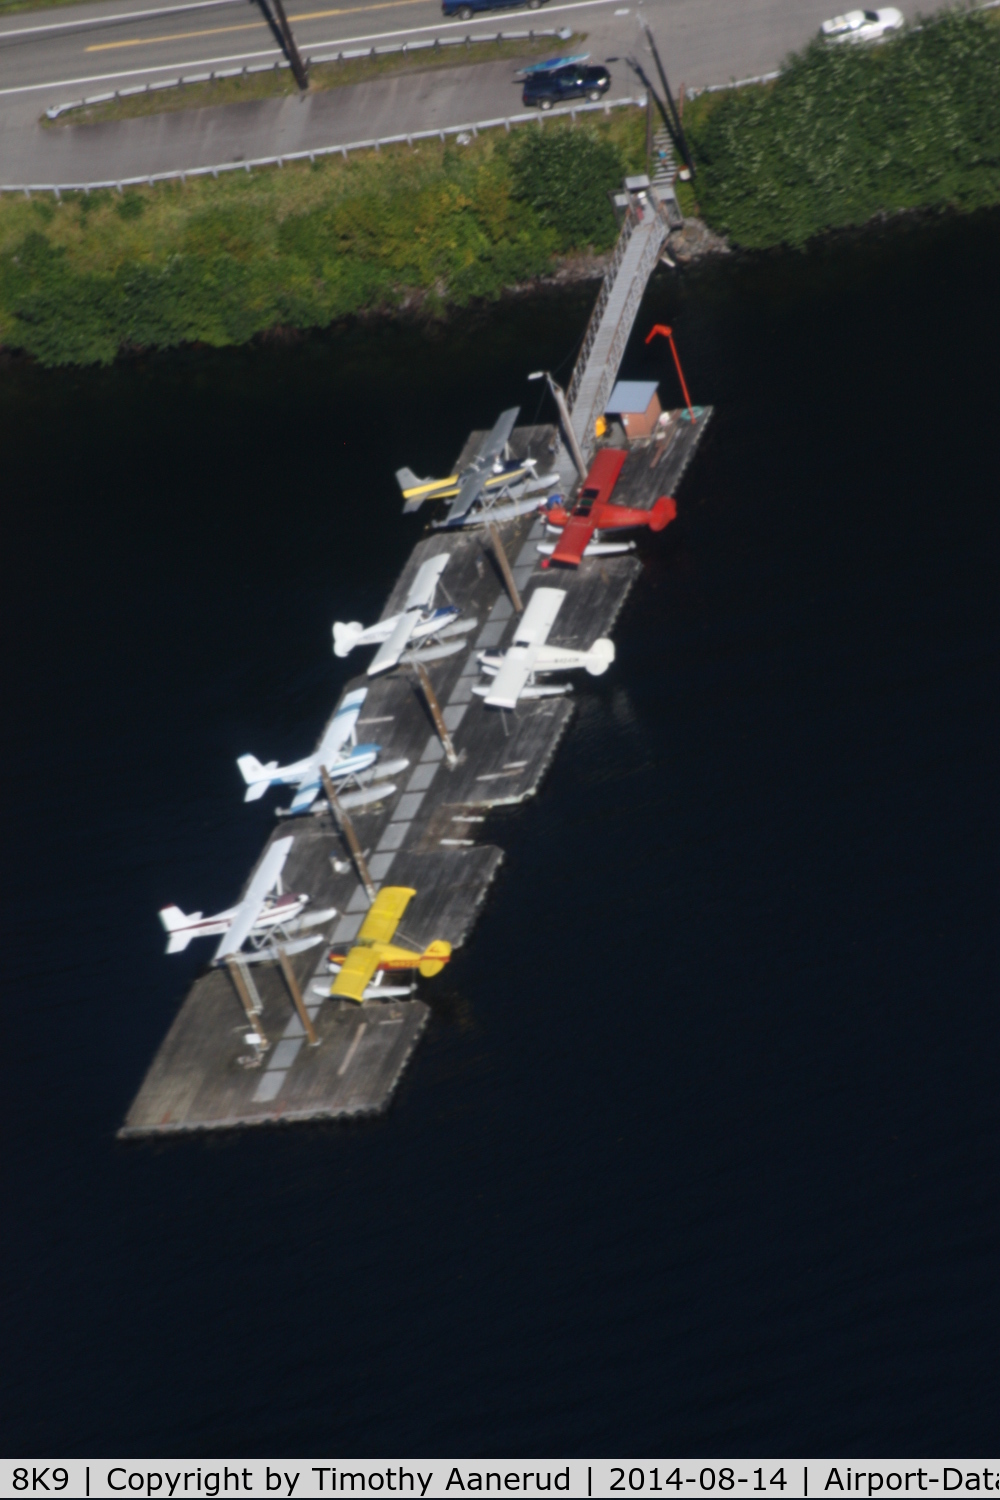 Murphys Pullout Seaplane Base (8K9) - Murphys Pullout seaplane base, Ketchikan AK USA, spotted while flying in N409PA.